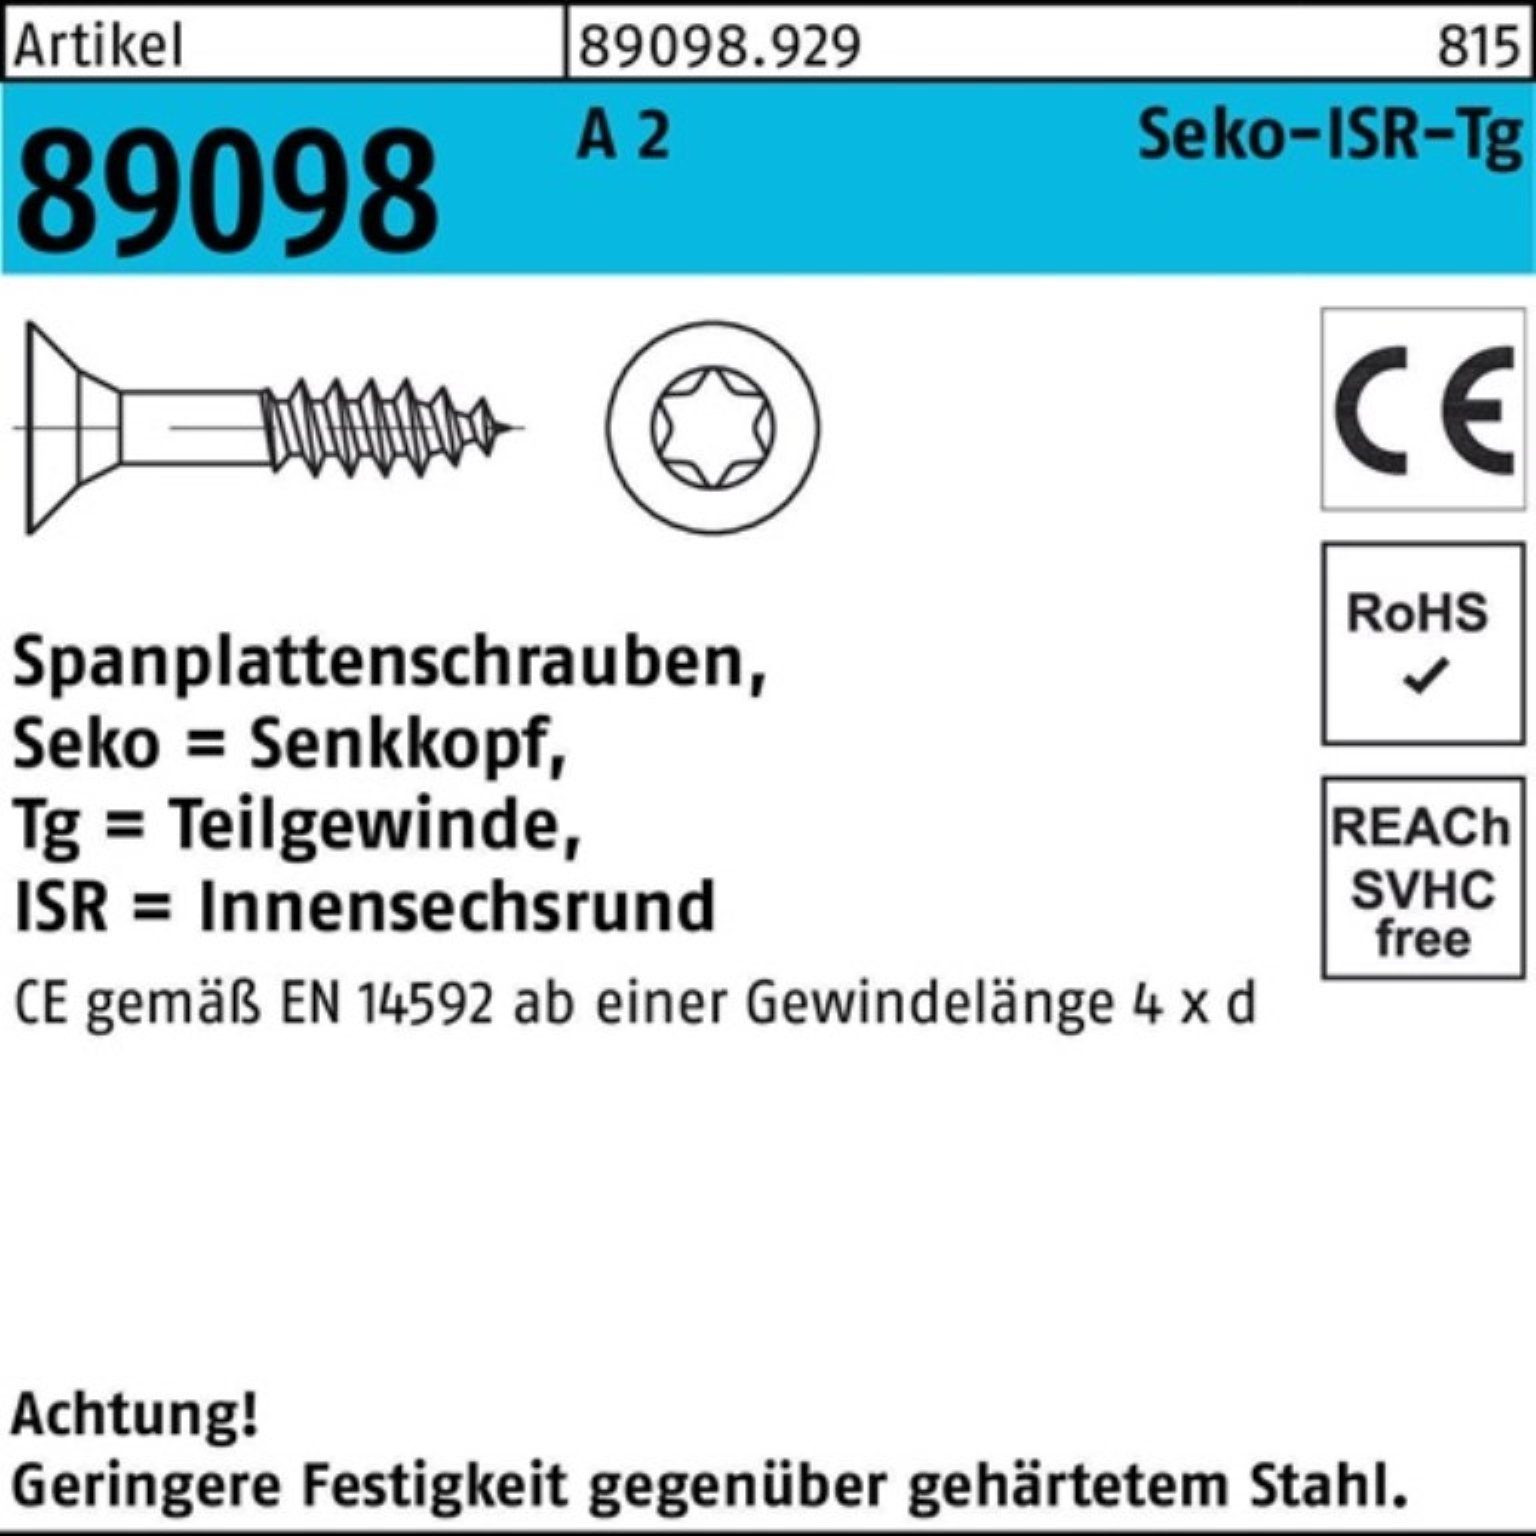 Pack R 89098 TG 1000 A Spanplattenschraube Spanplattenschraube SEKO 4x 2 ISR 1000er 35-T20 Reyher